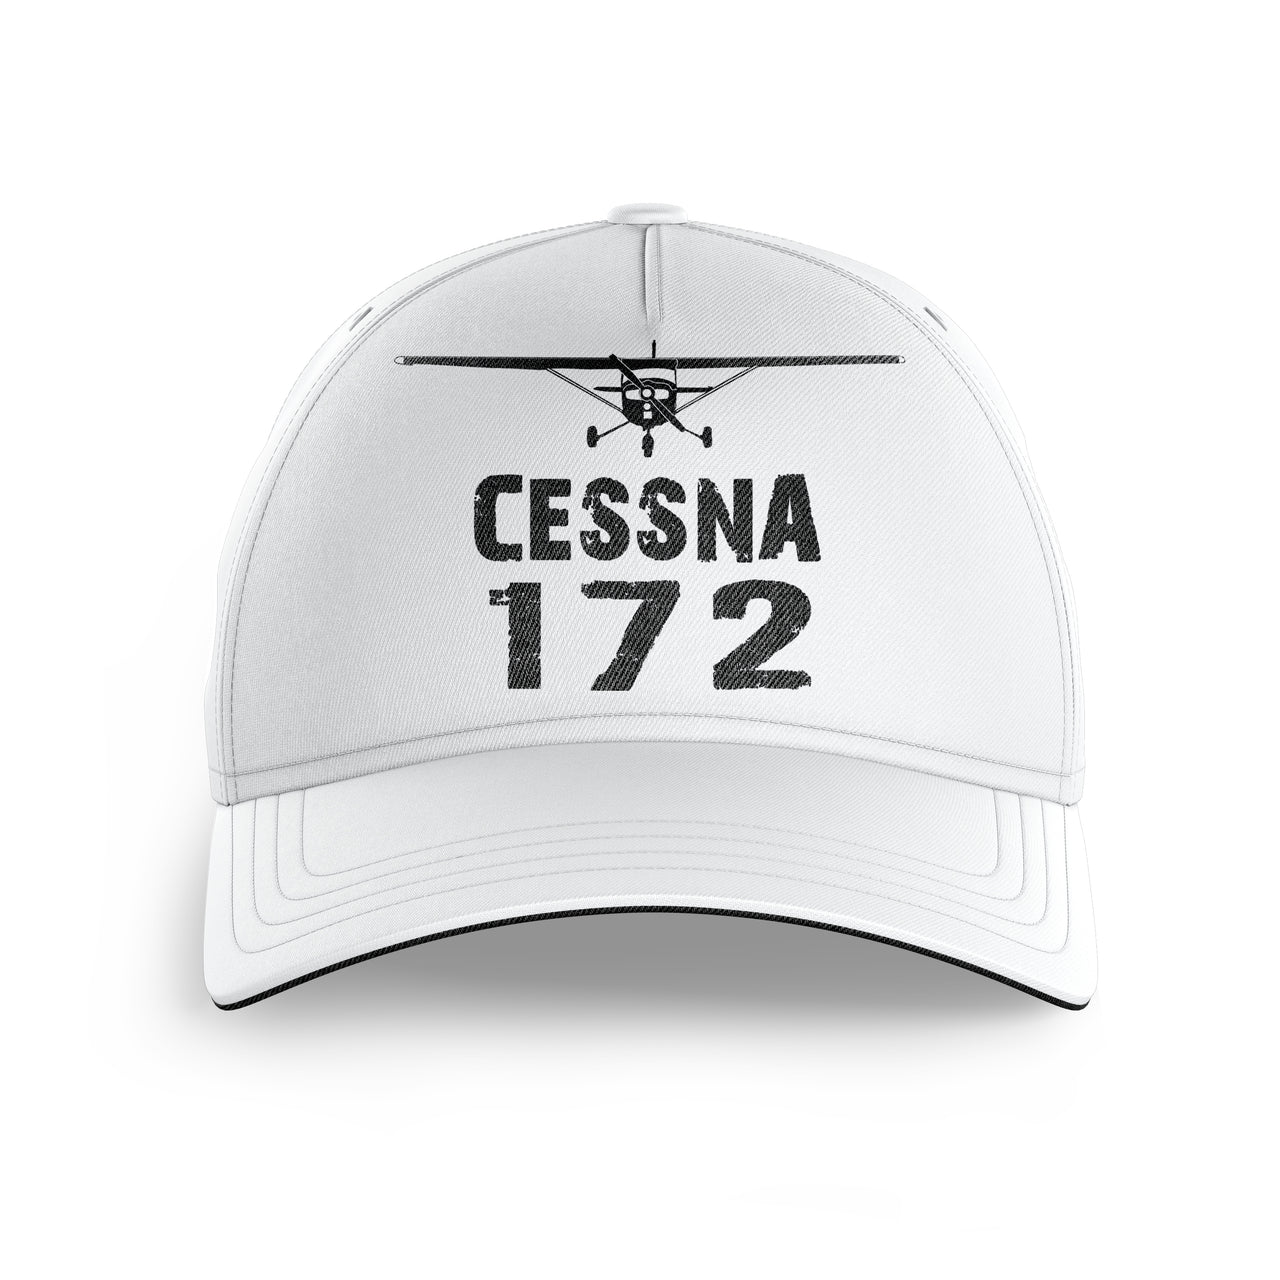 Cessna 172 & Plane Printed Hats